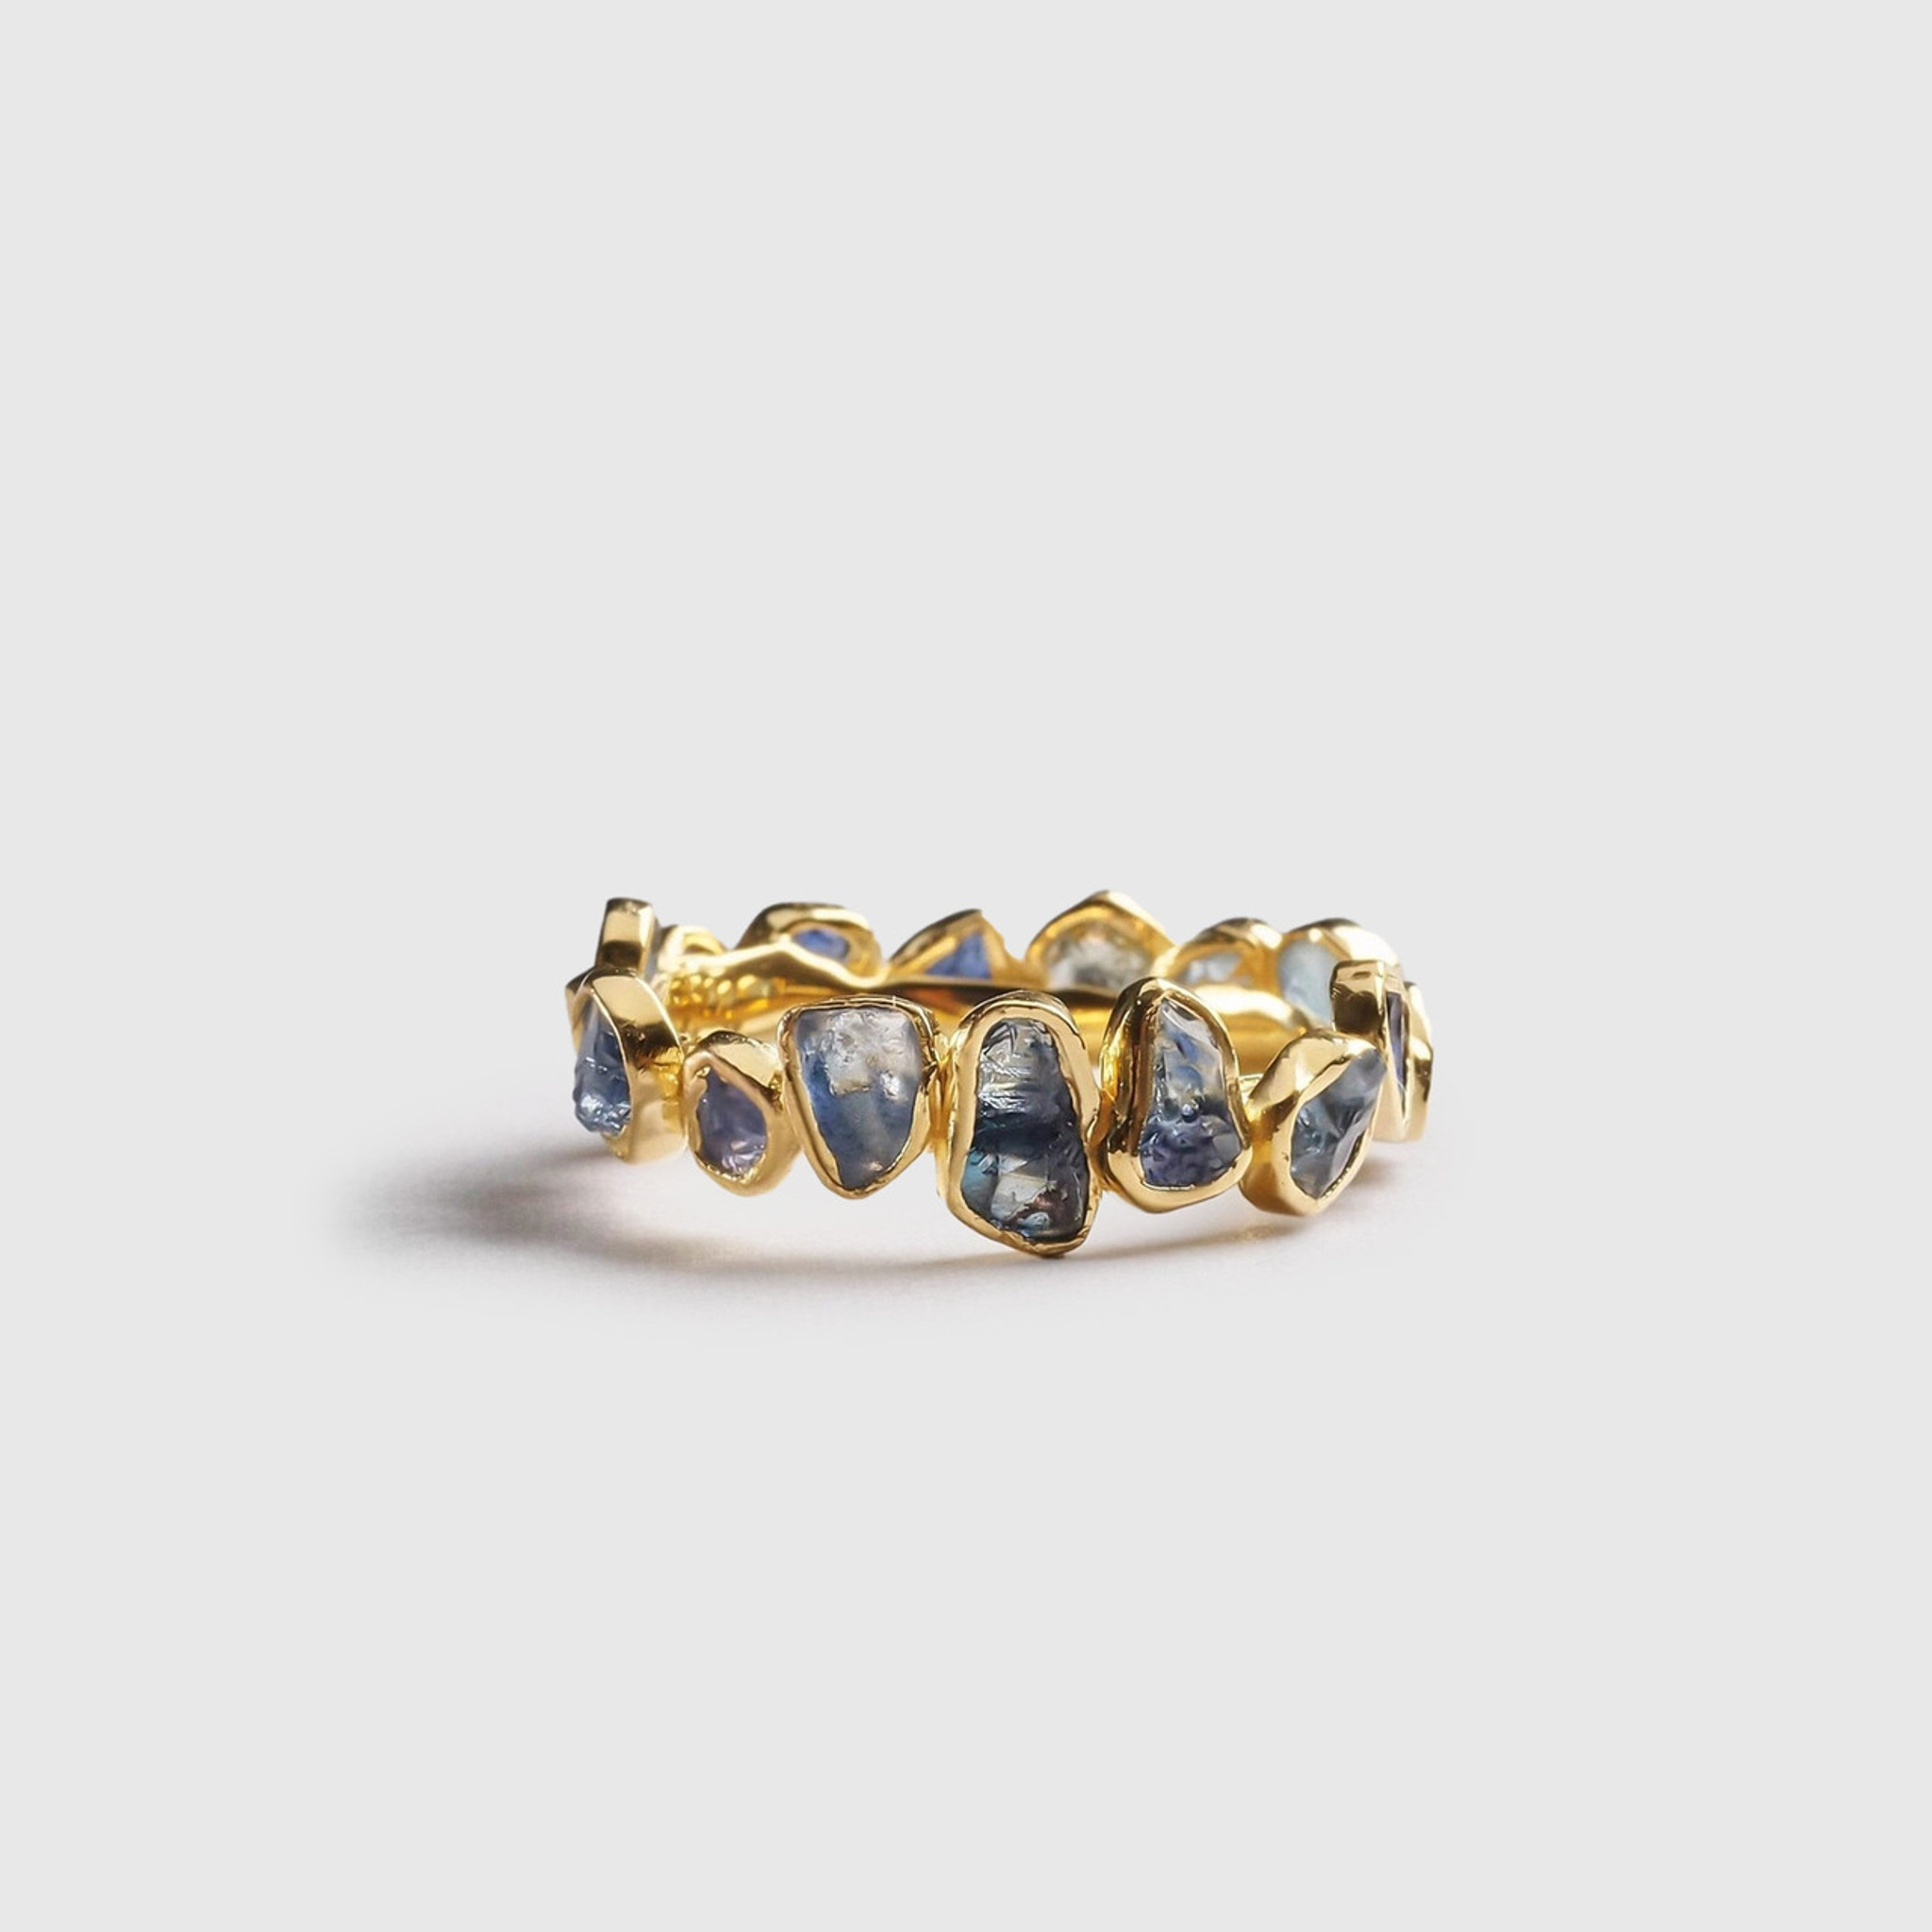 Livia Blue Sapphire Ring, Contemporary Jewelry by German Kabirski | elk & HAMMER Gallery